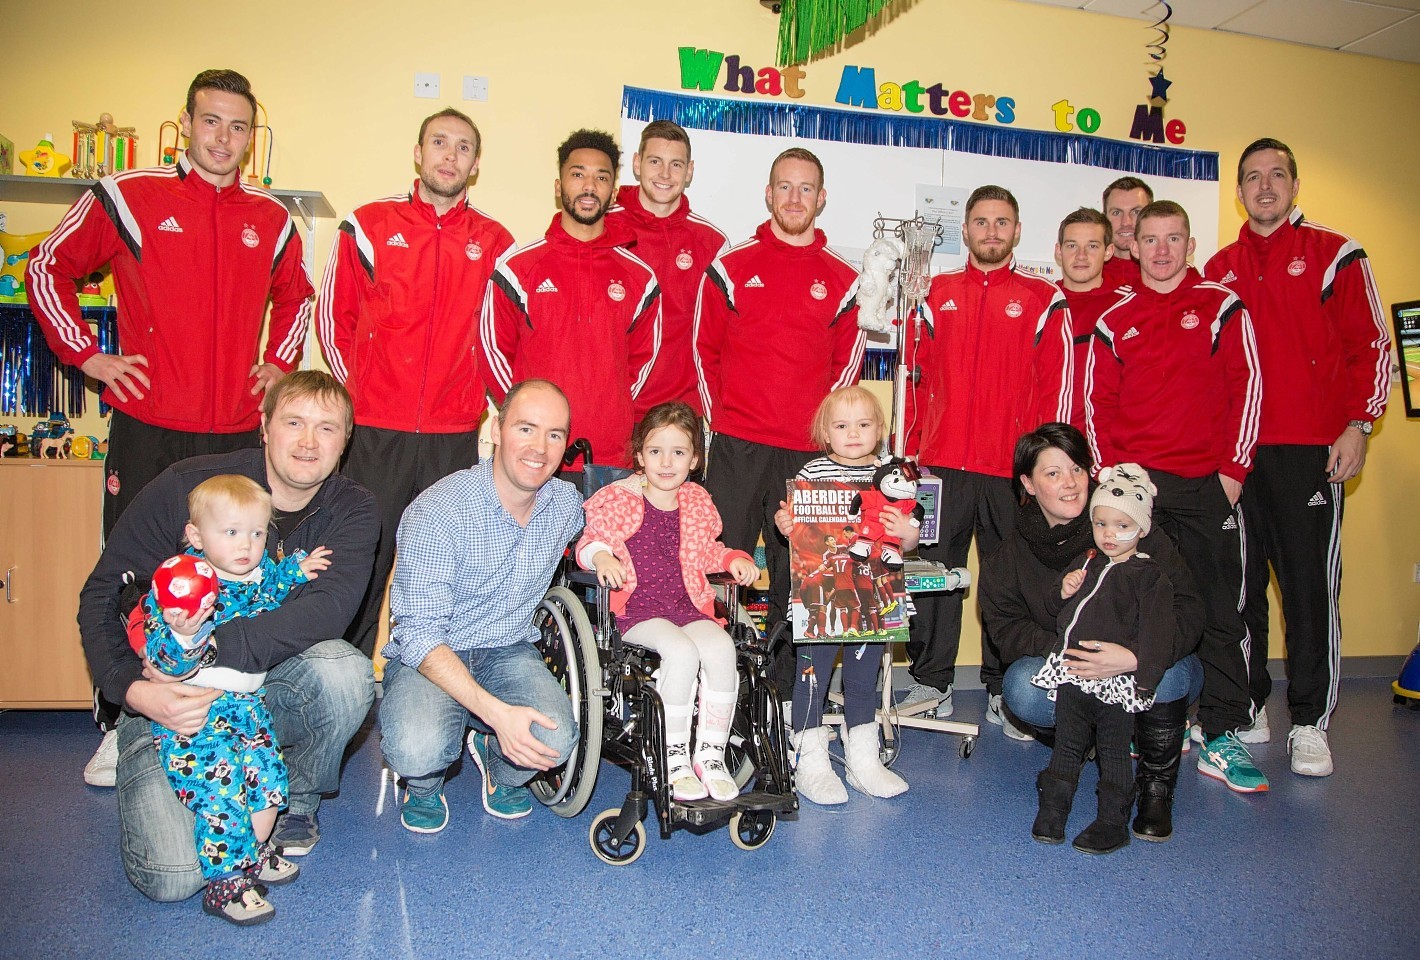 The Aberdeen squad met the children at Aberdeen's Royal Children's Hospital